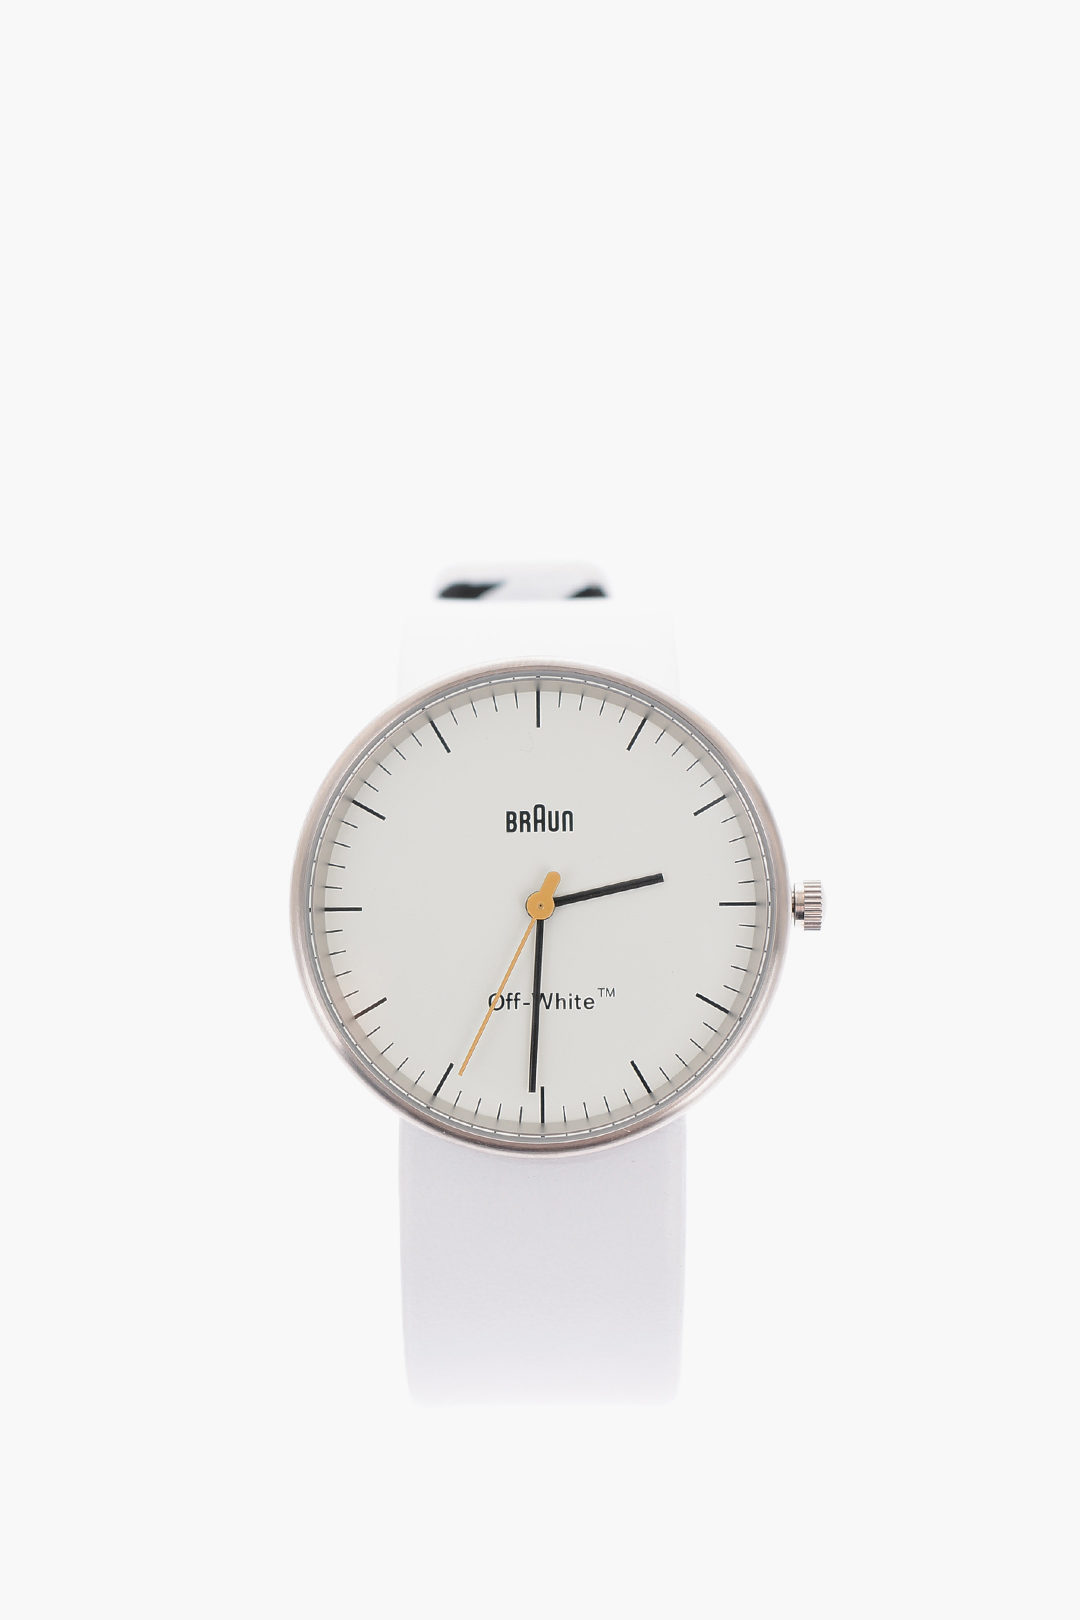 Off-White BRAUN orologio analogico con cinturino in pelle uomo - Glamood  Outlet